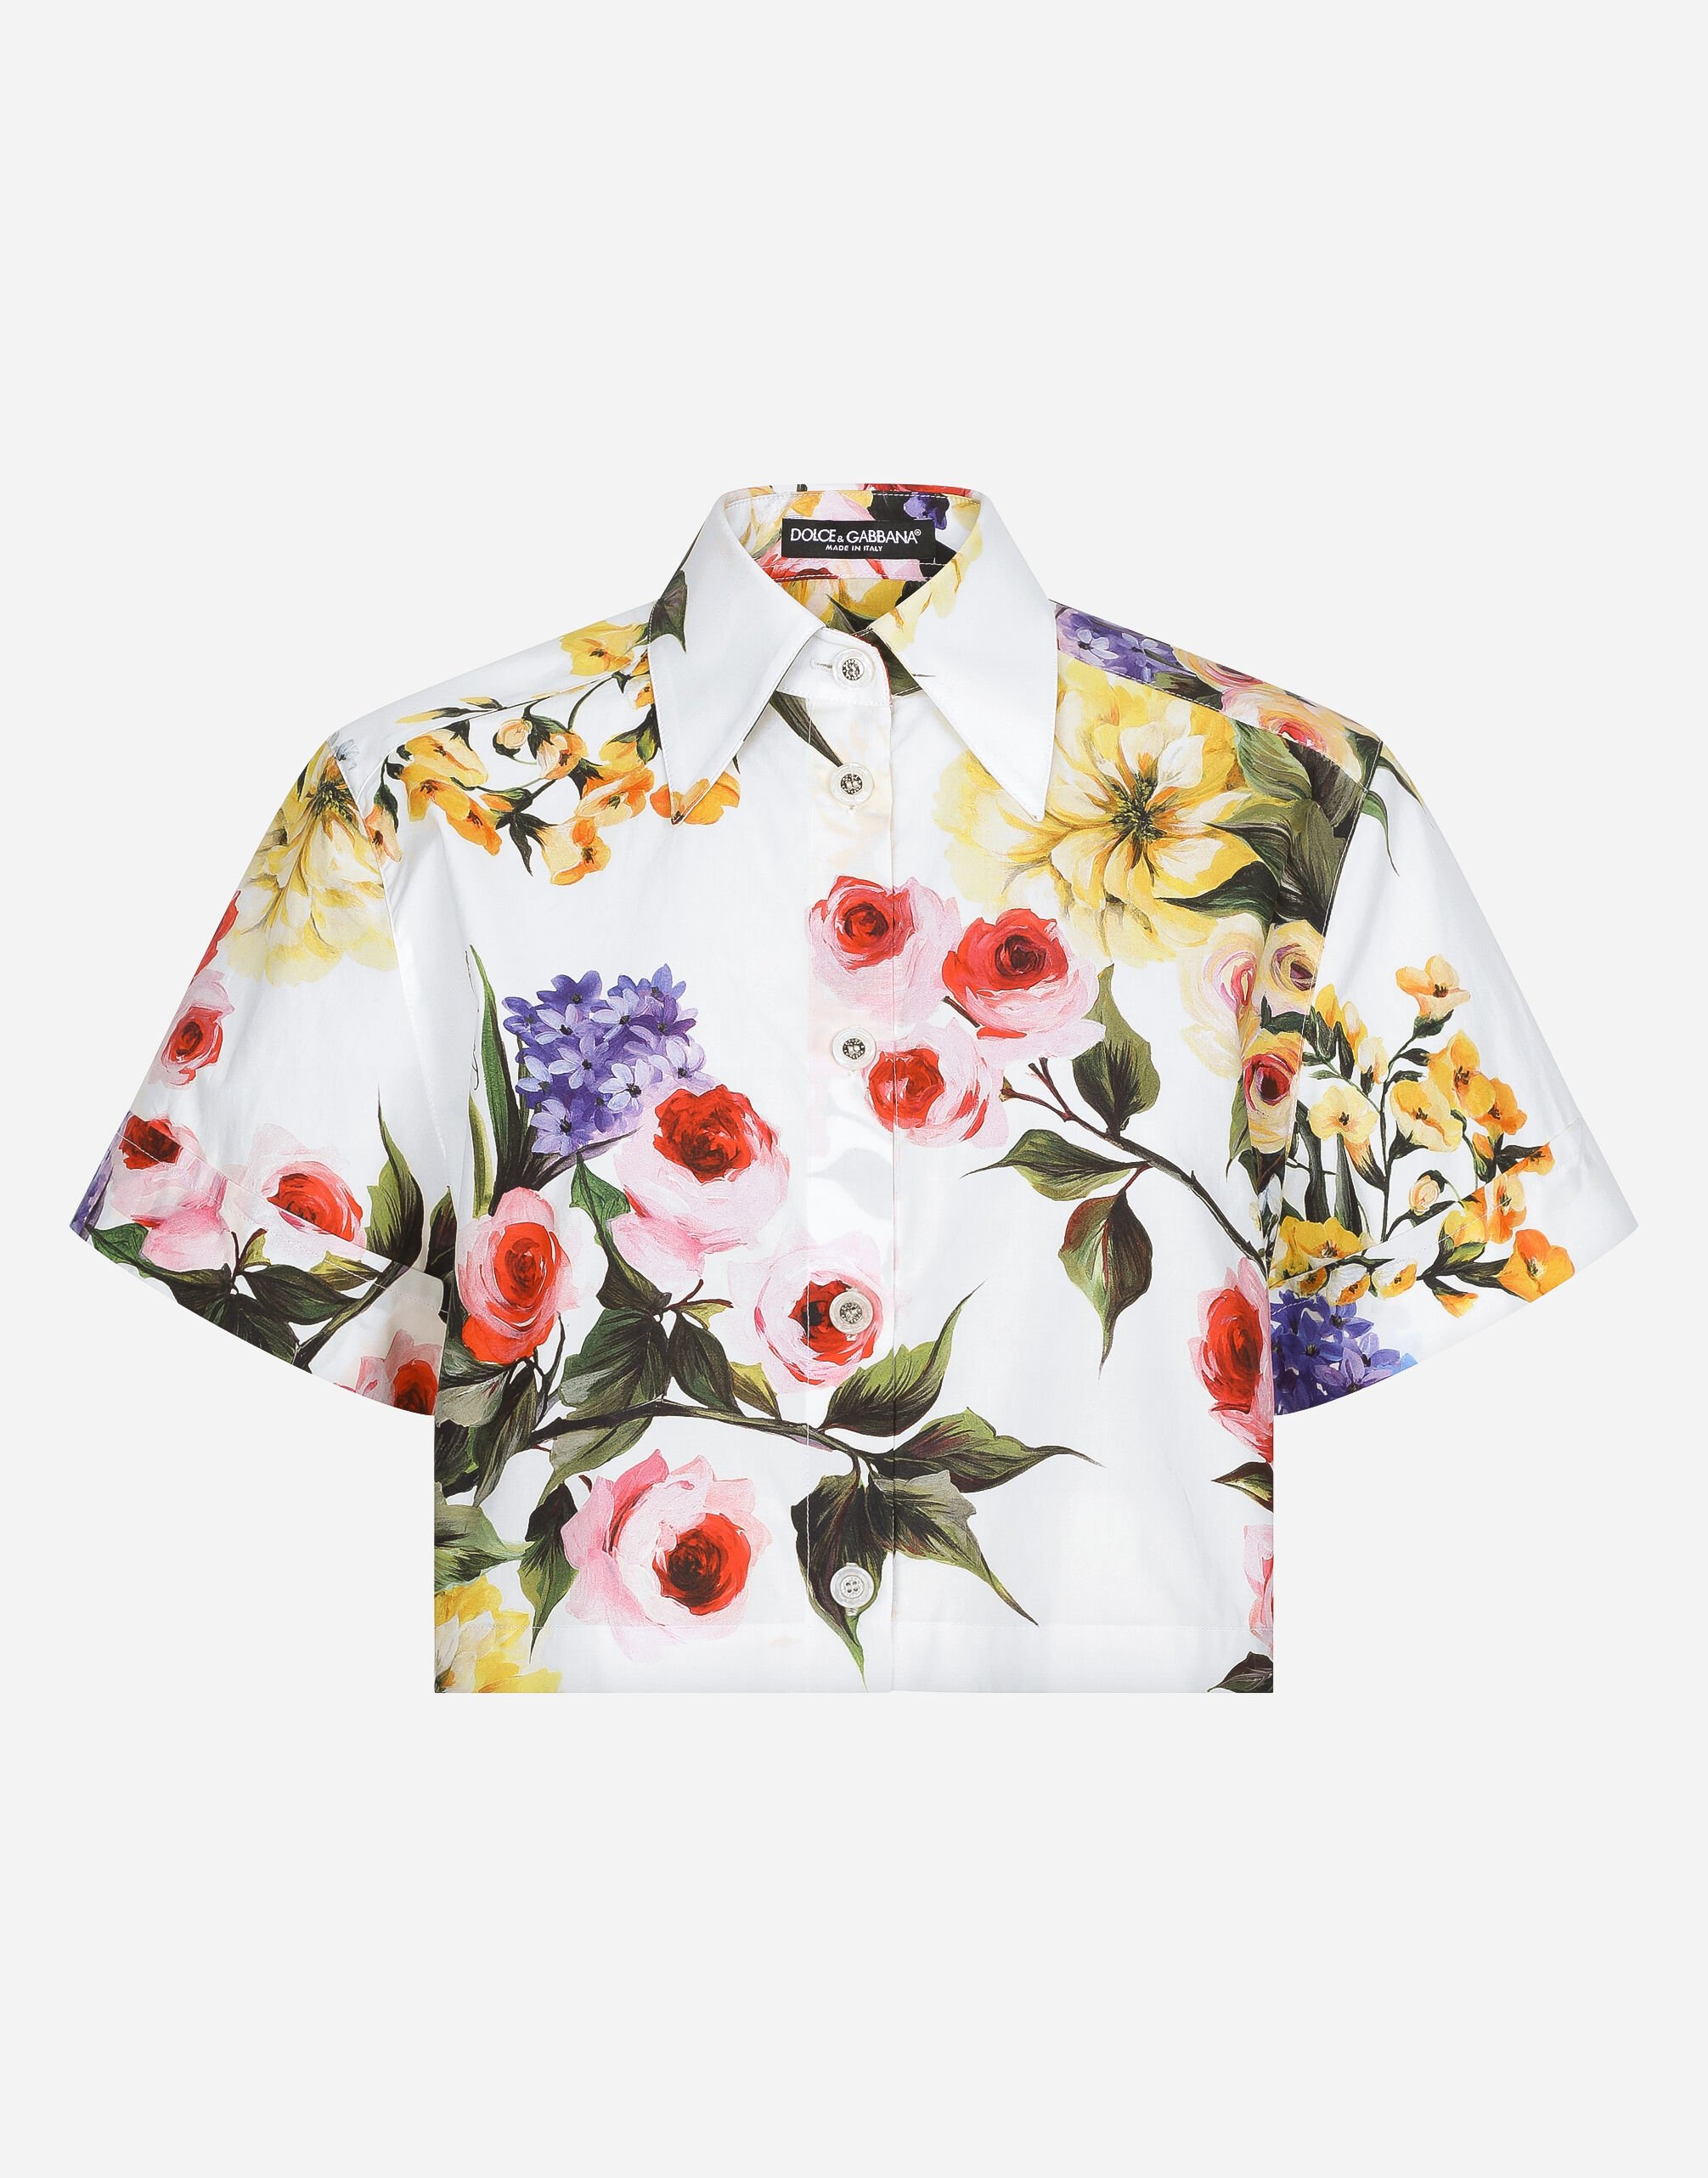 Dolce & Gabbana Short cotton shirt with garden print female Print